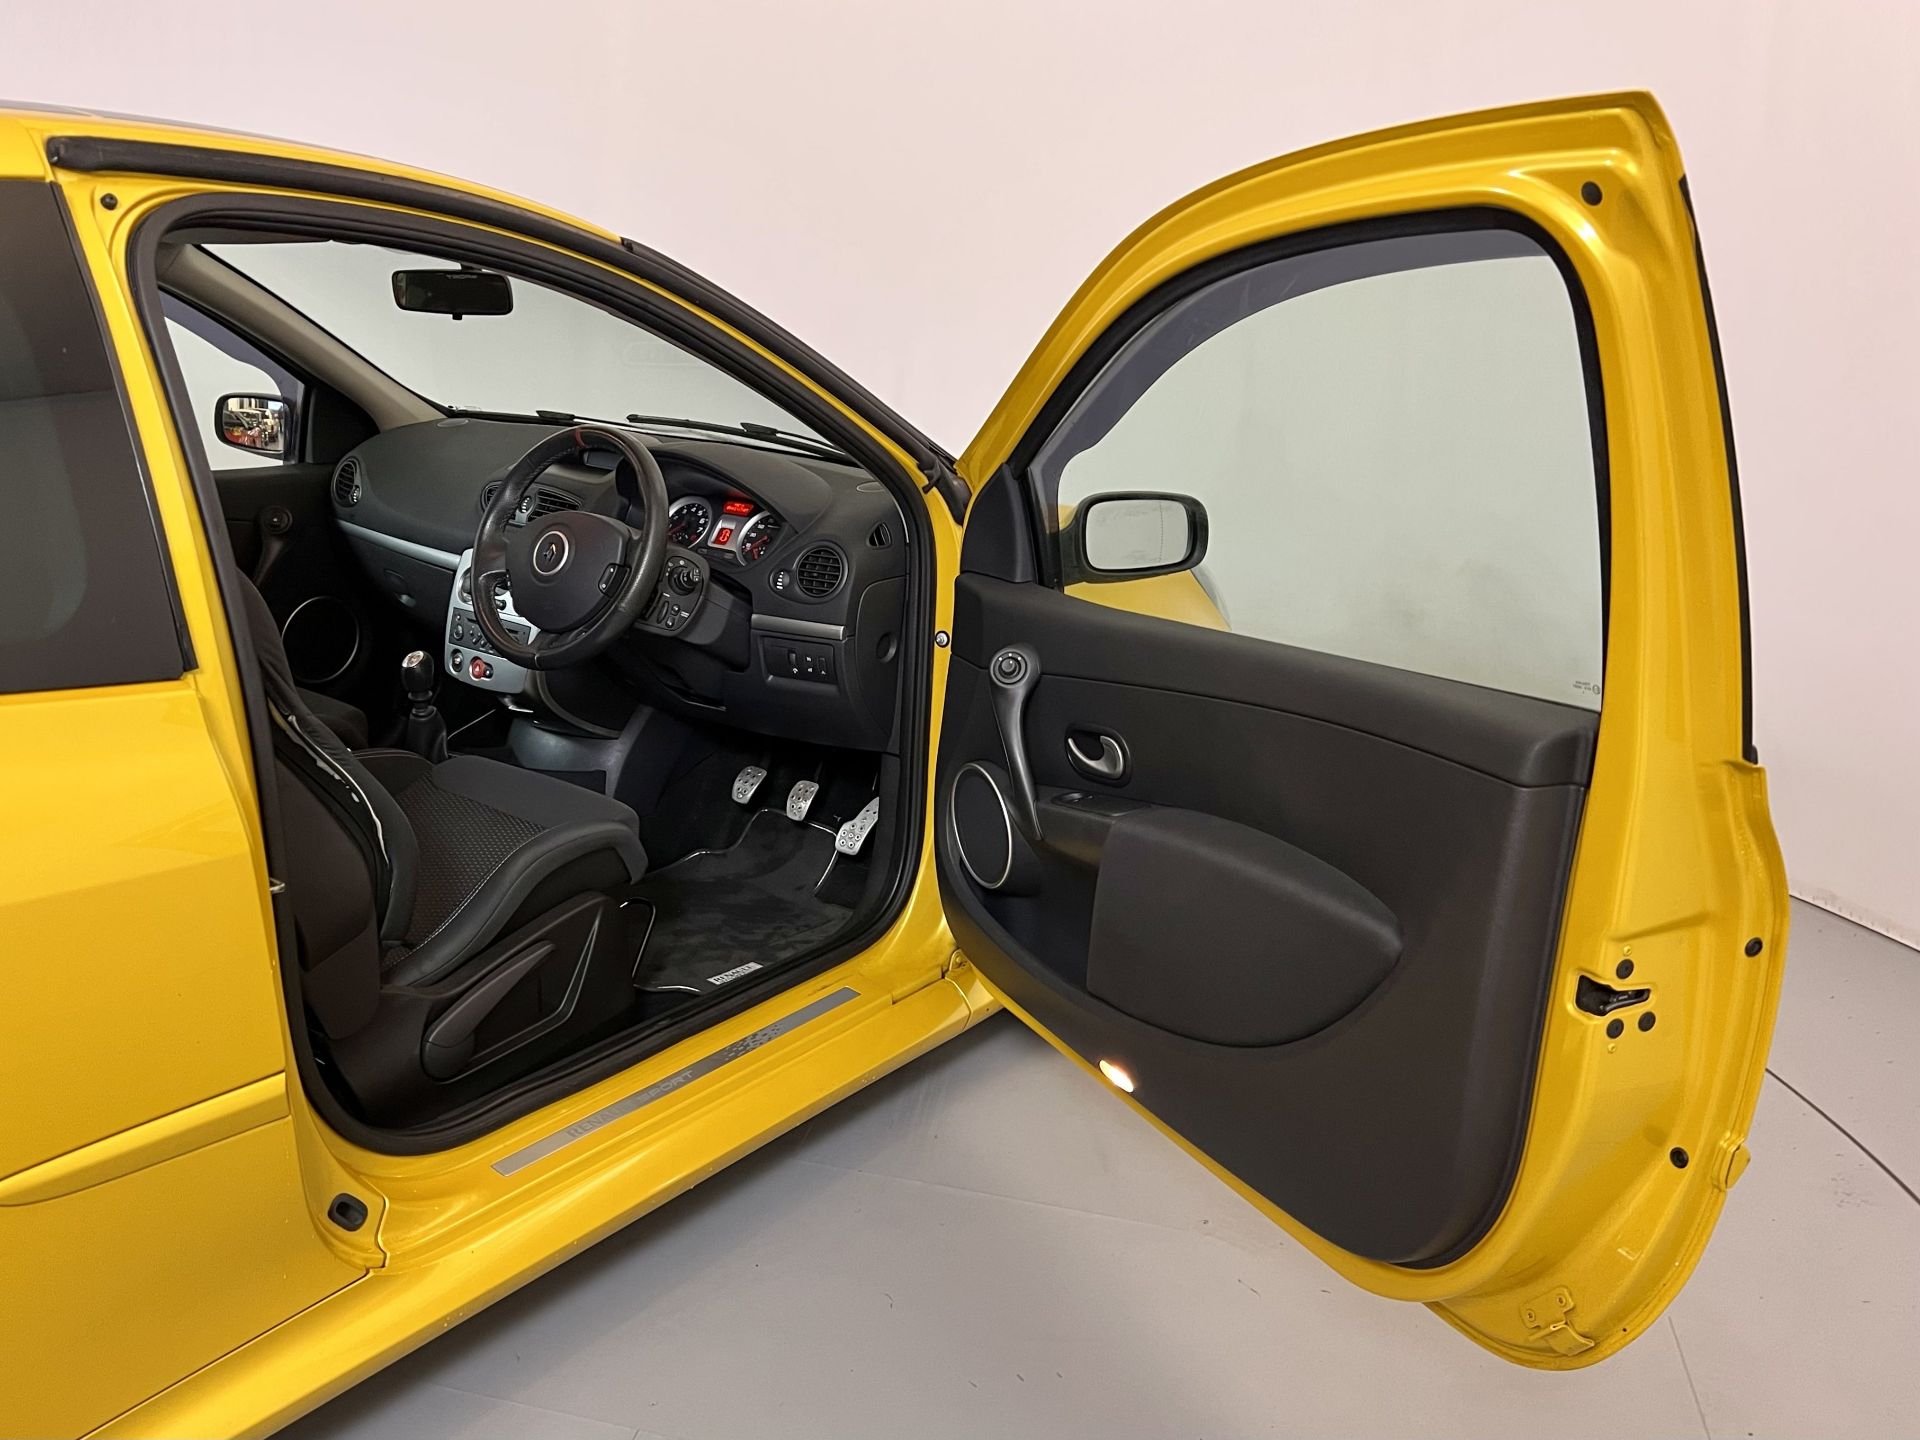 Renault Clio 197 F1 - Image 17 of 30